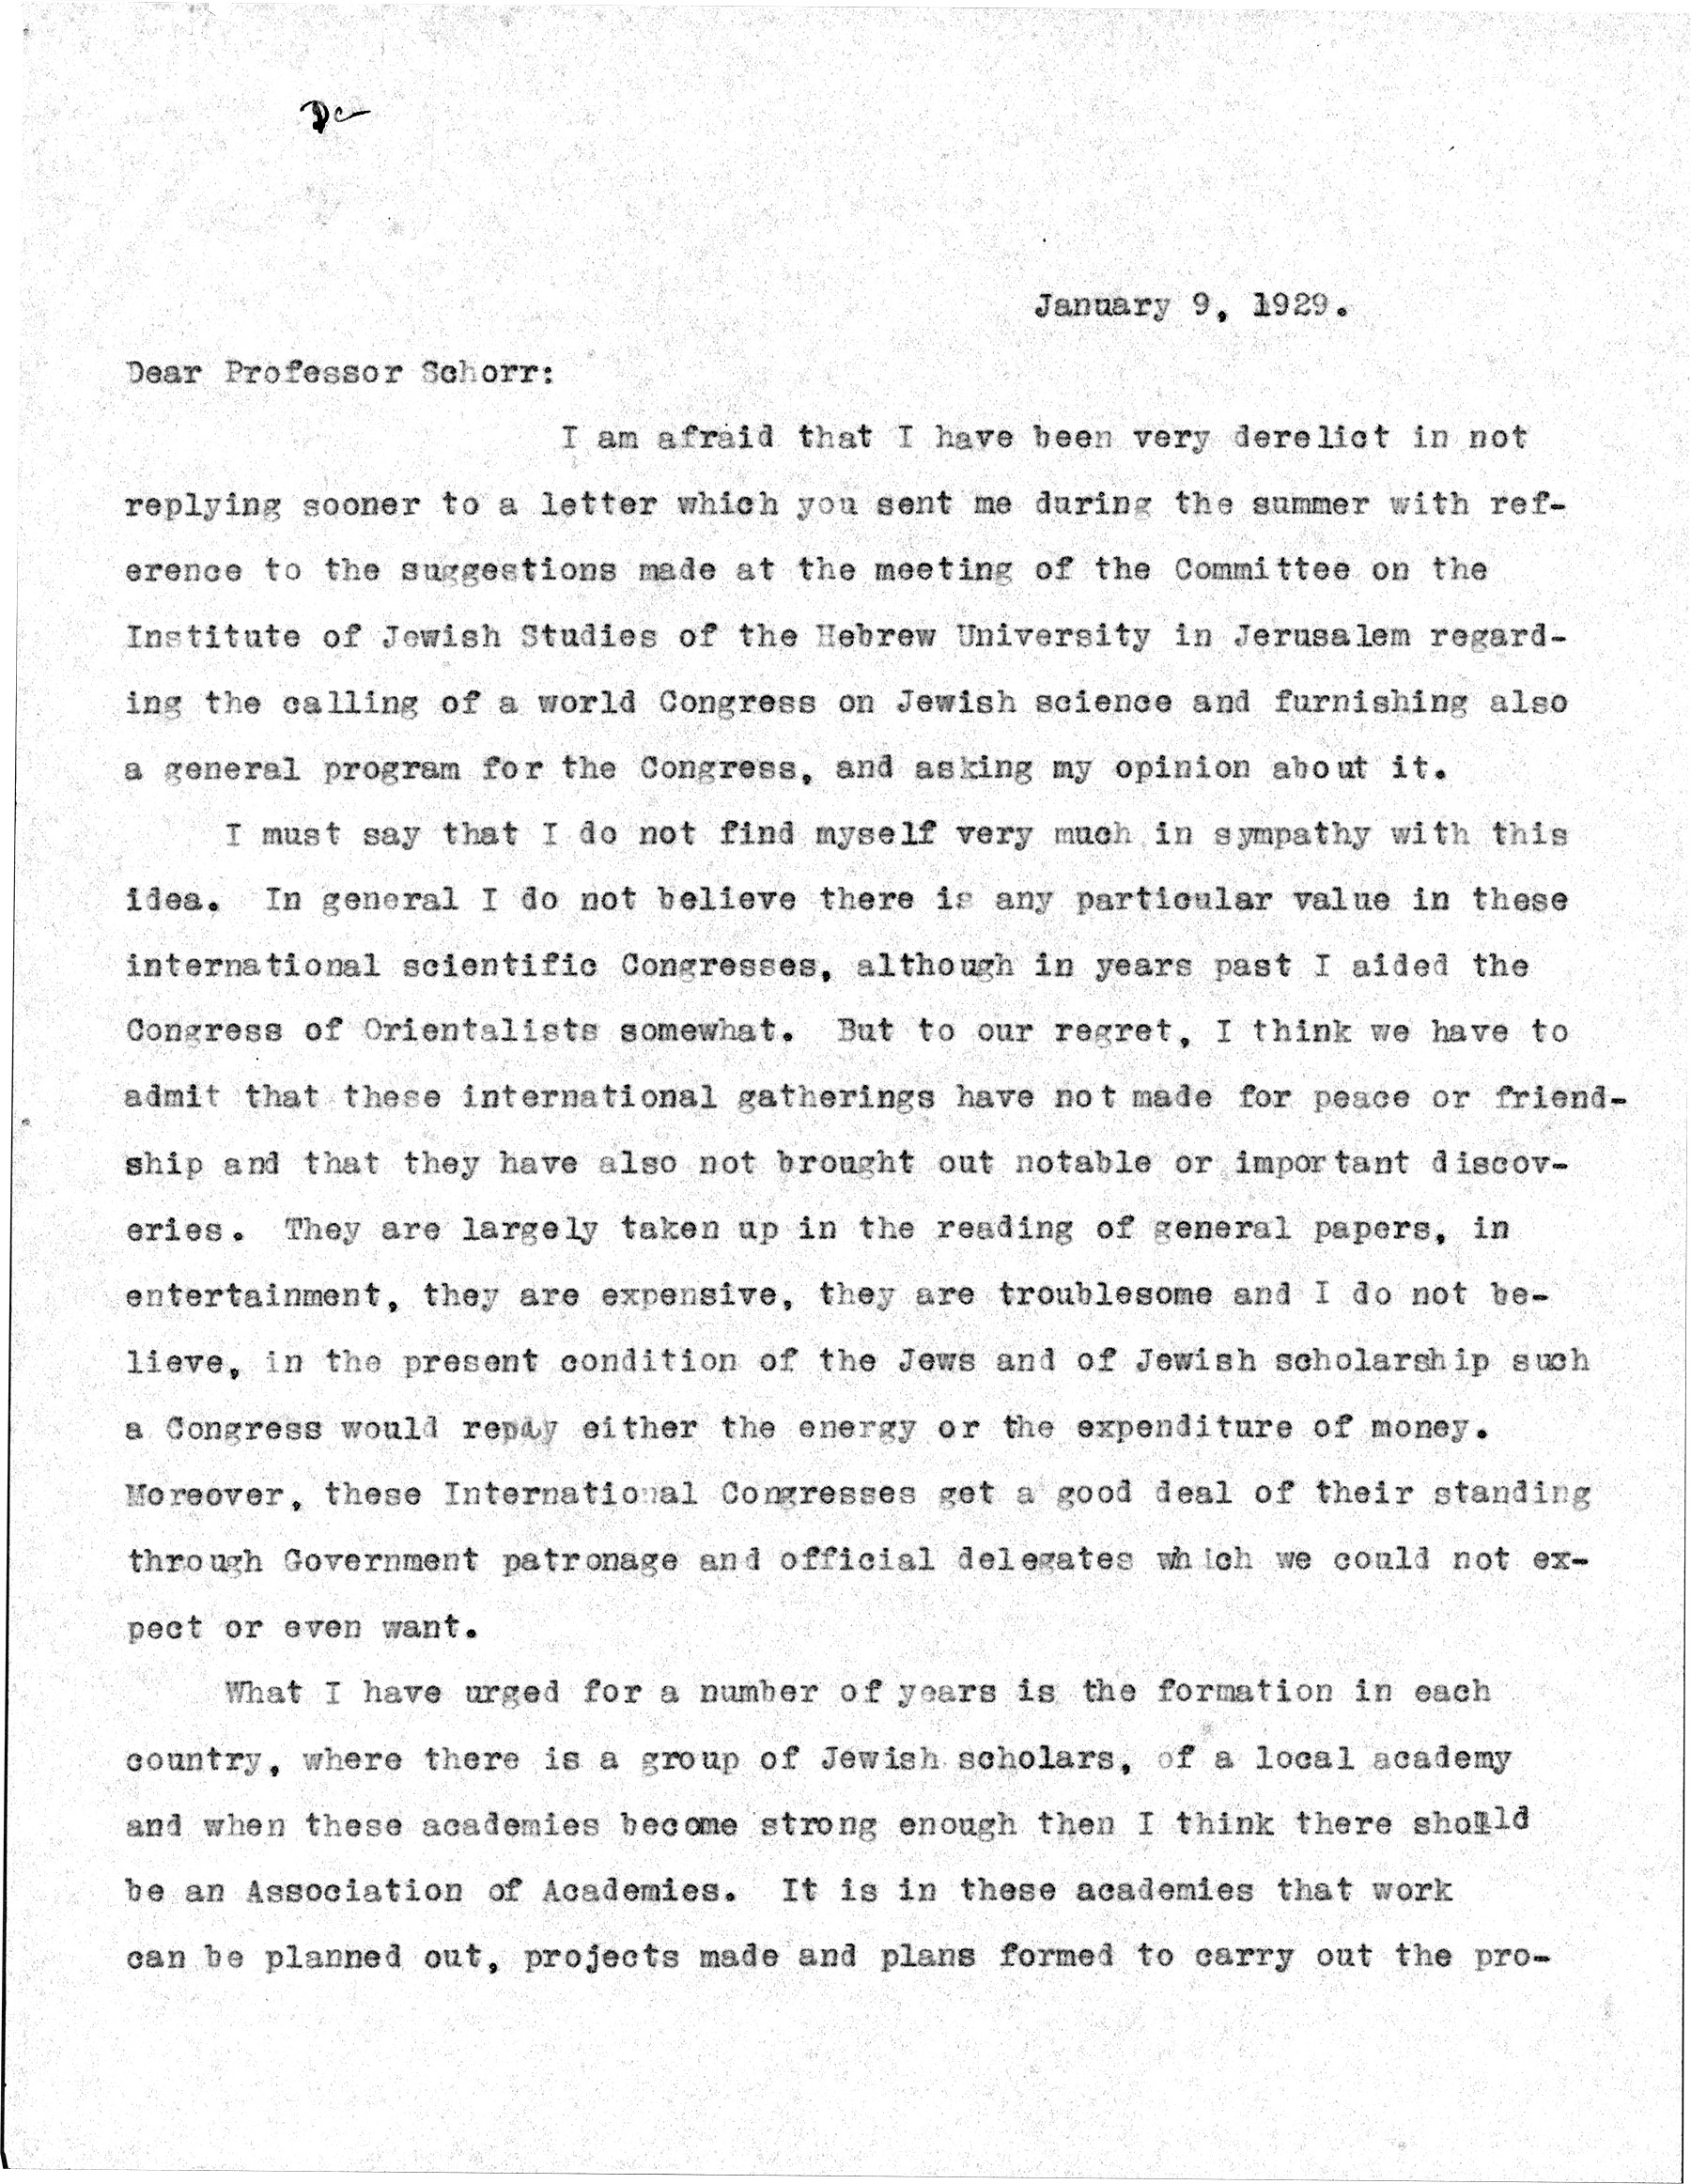 Cyrus Adler letter, page 1